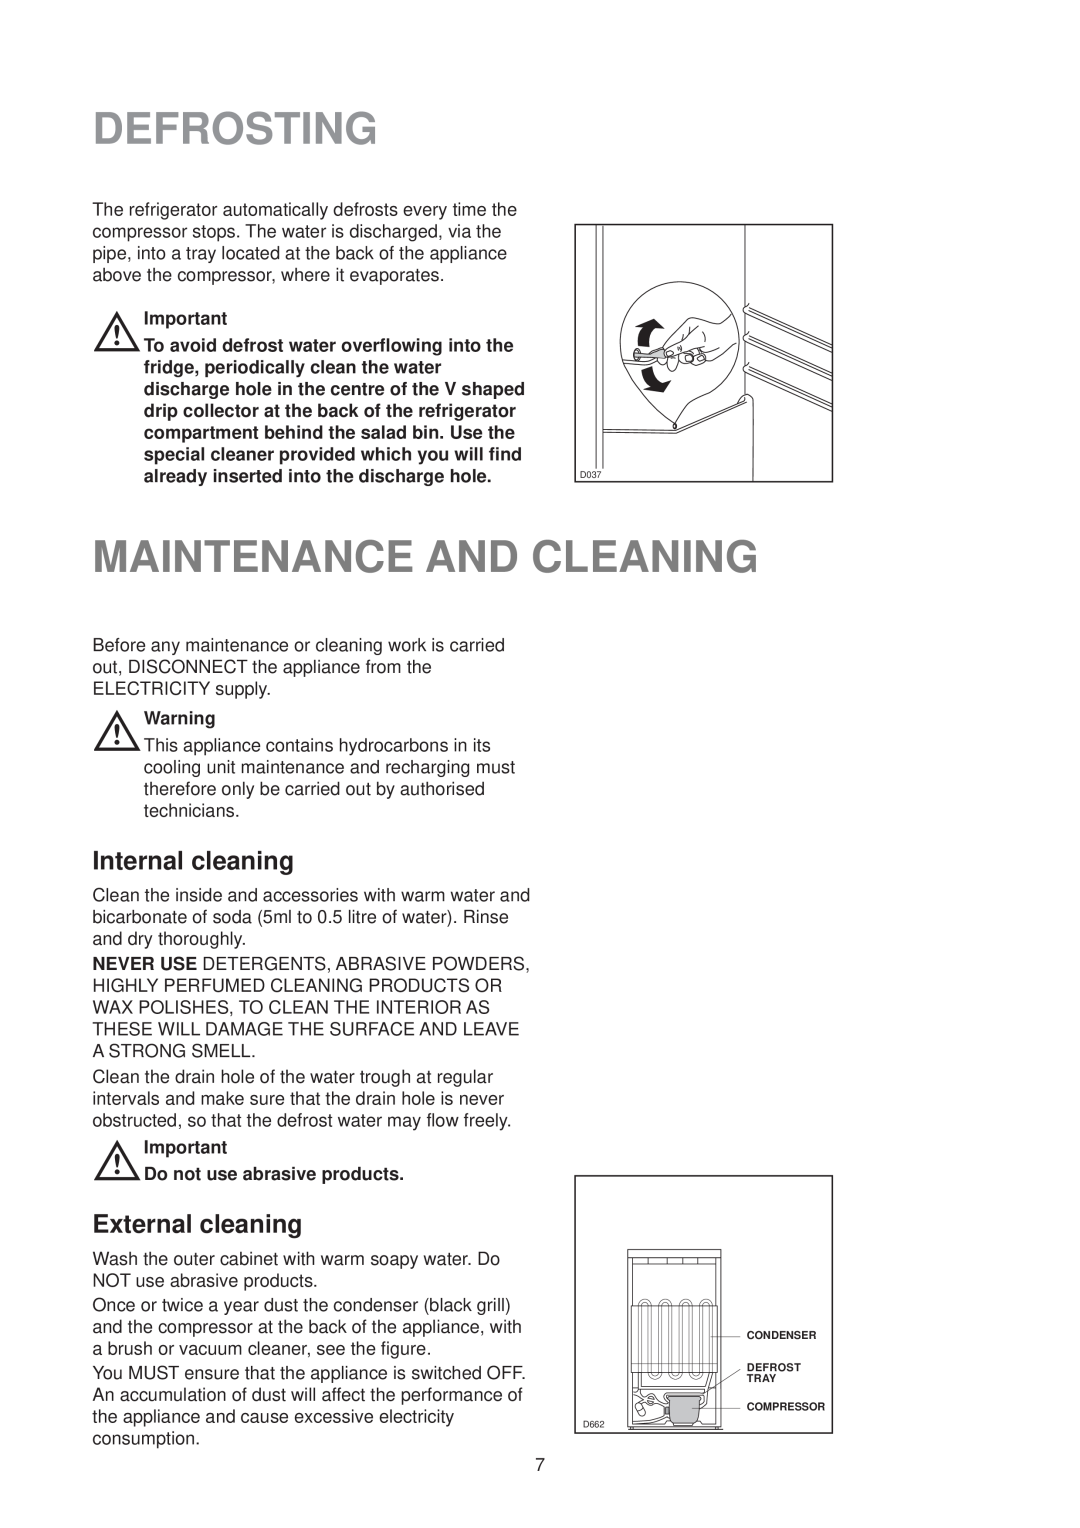 Electrolux U21312 manual Defrosting, Maintenance And Cleaning, Internal cleaning, External cleaning 